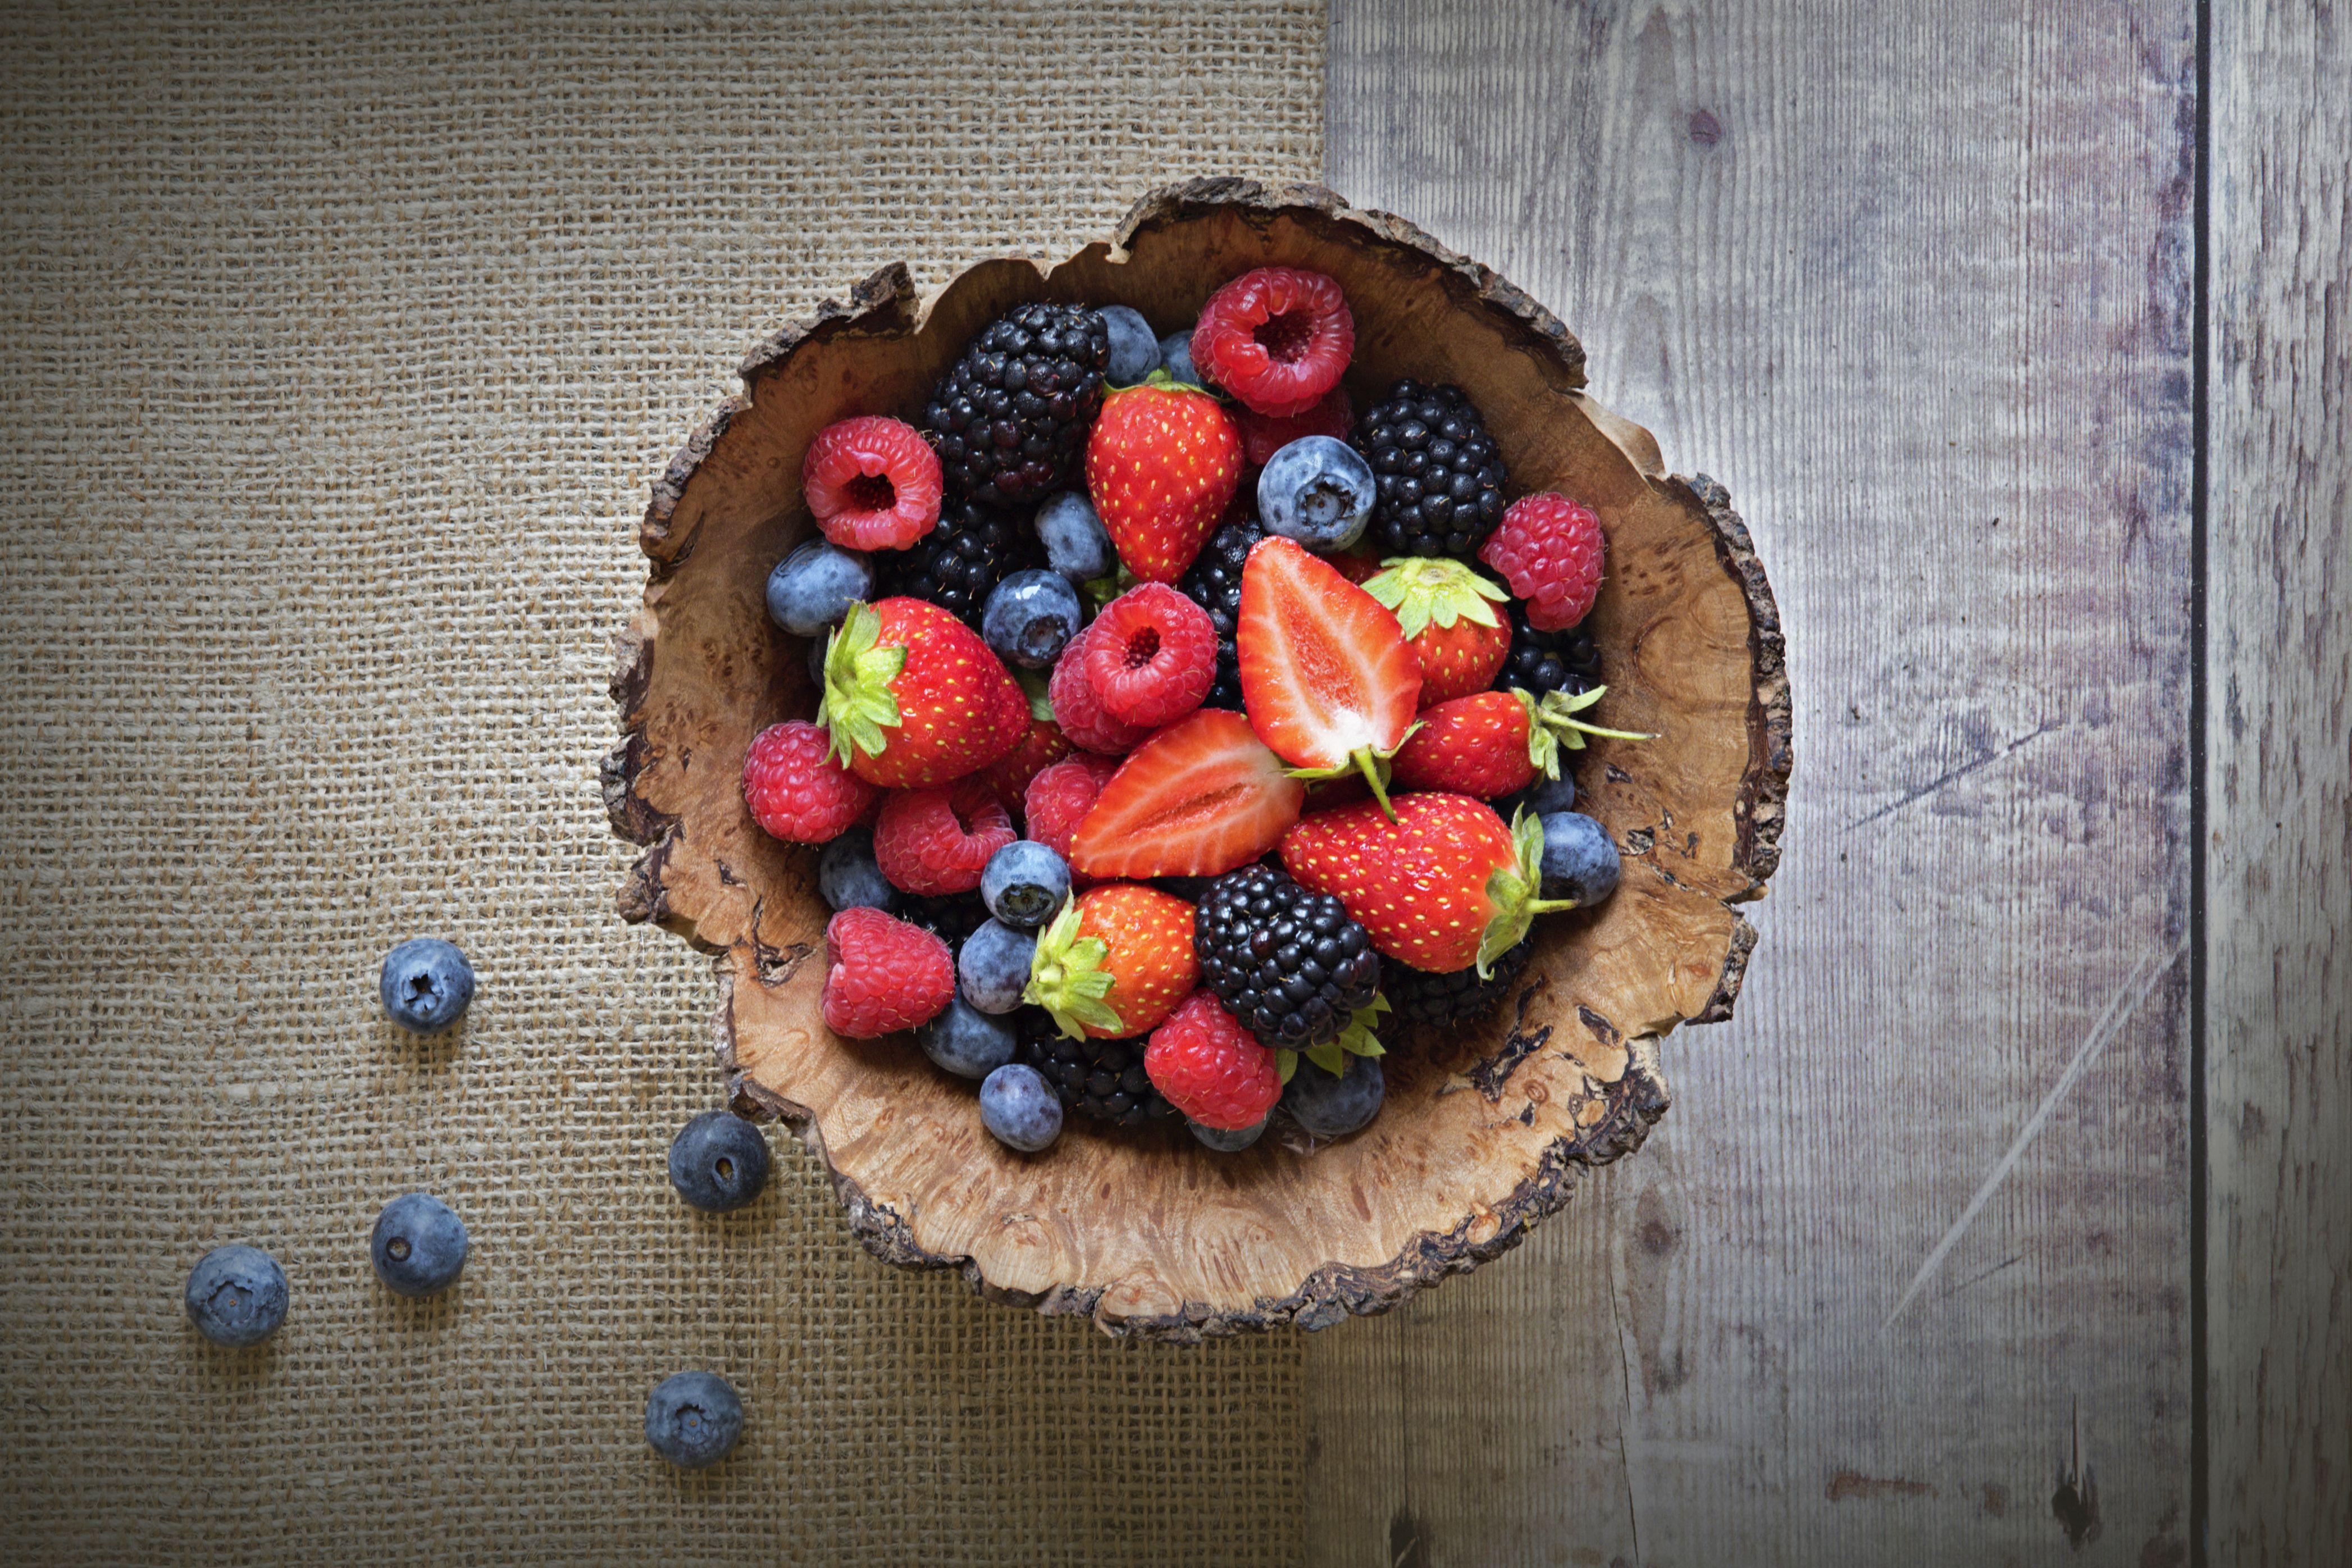 Close-up image of a wooden bowl full of berries including strawberries, raspberries, black berries, and blue berries.